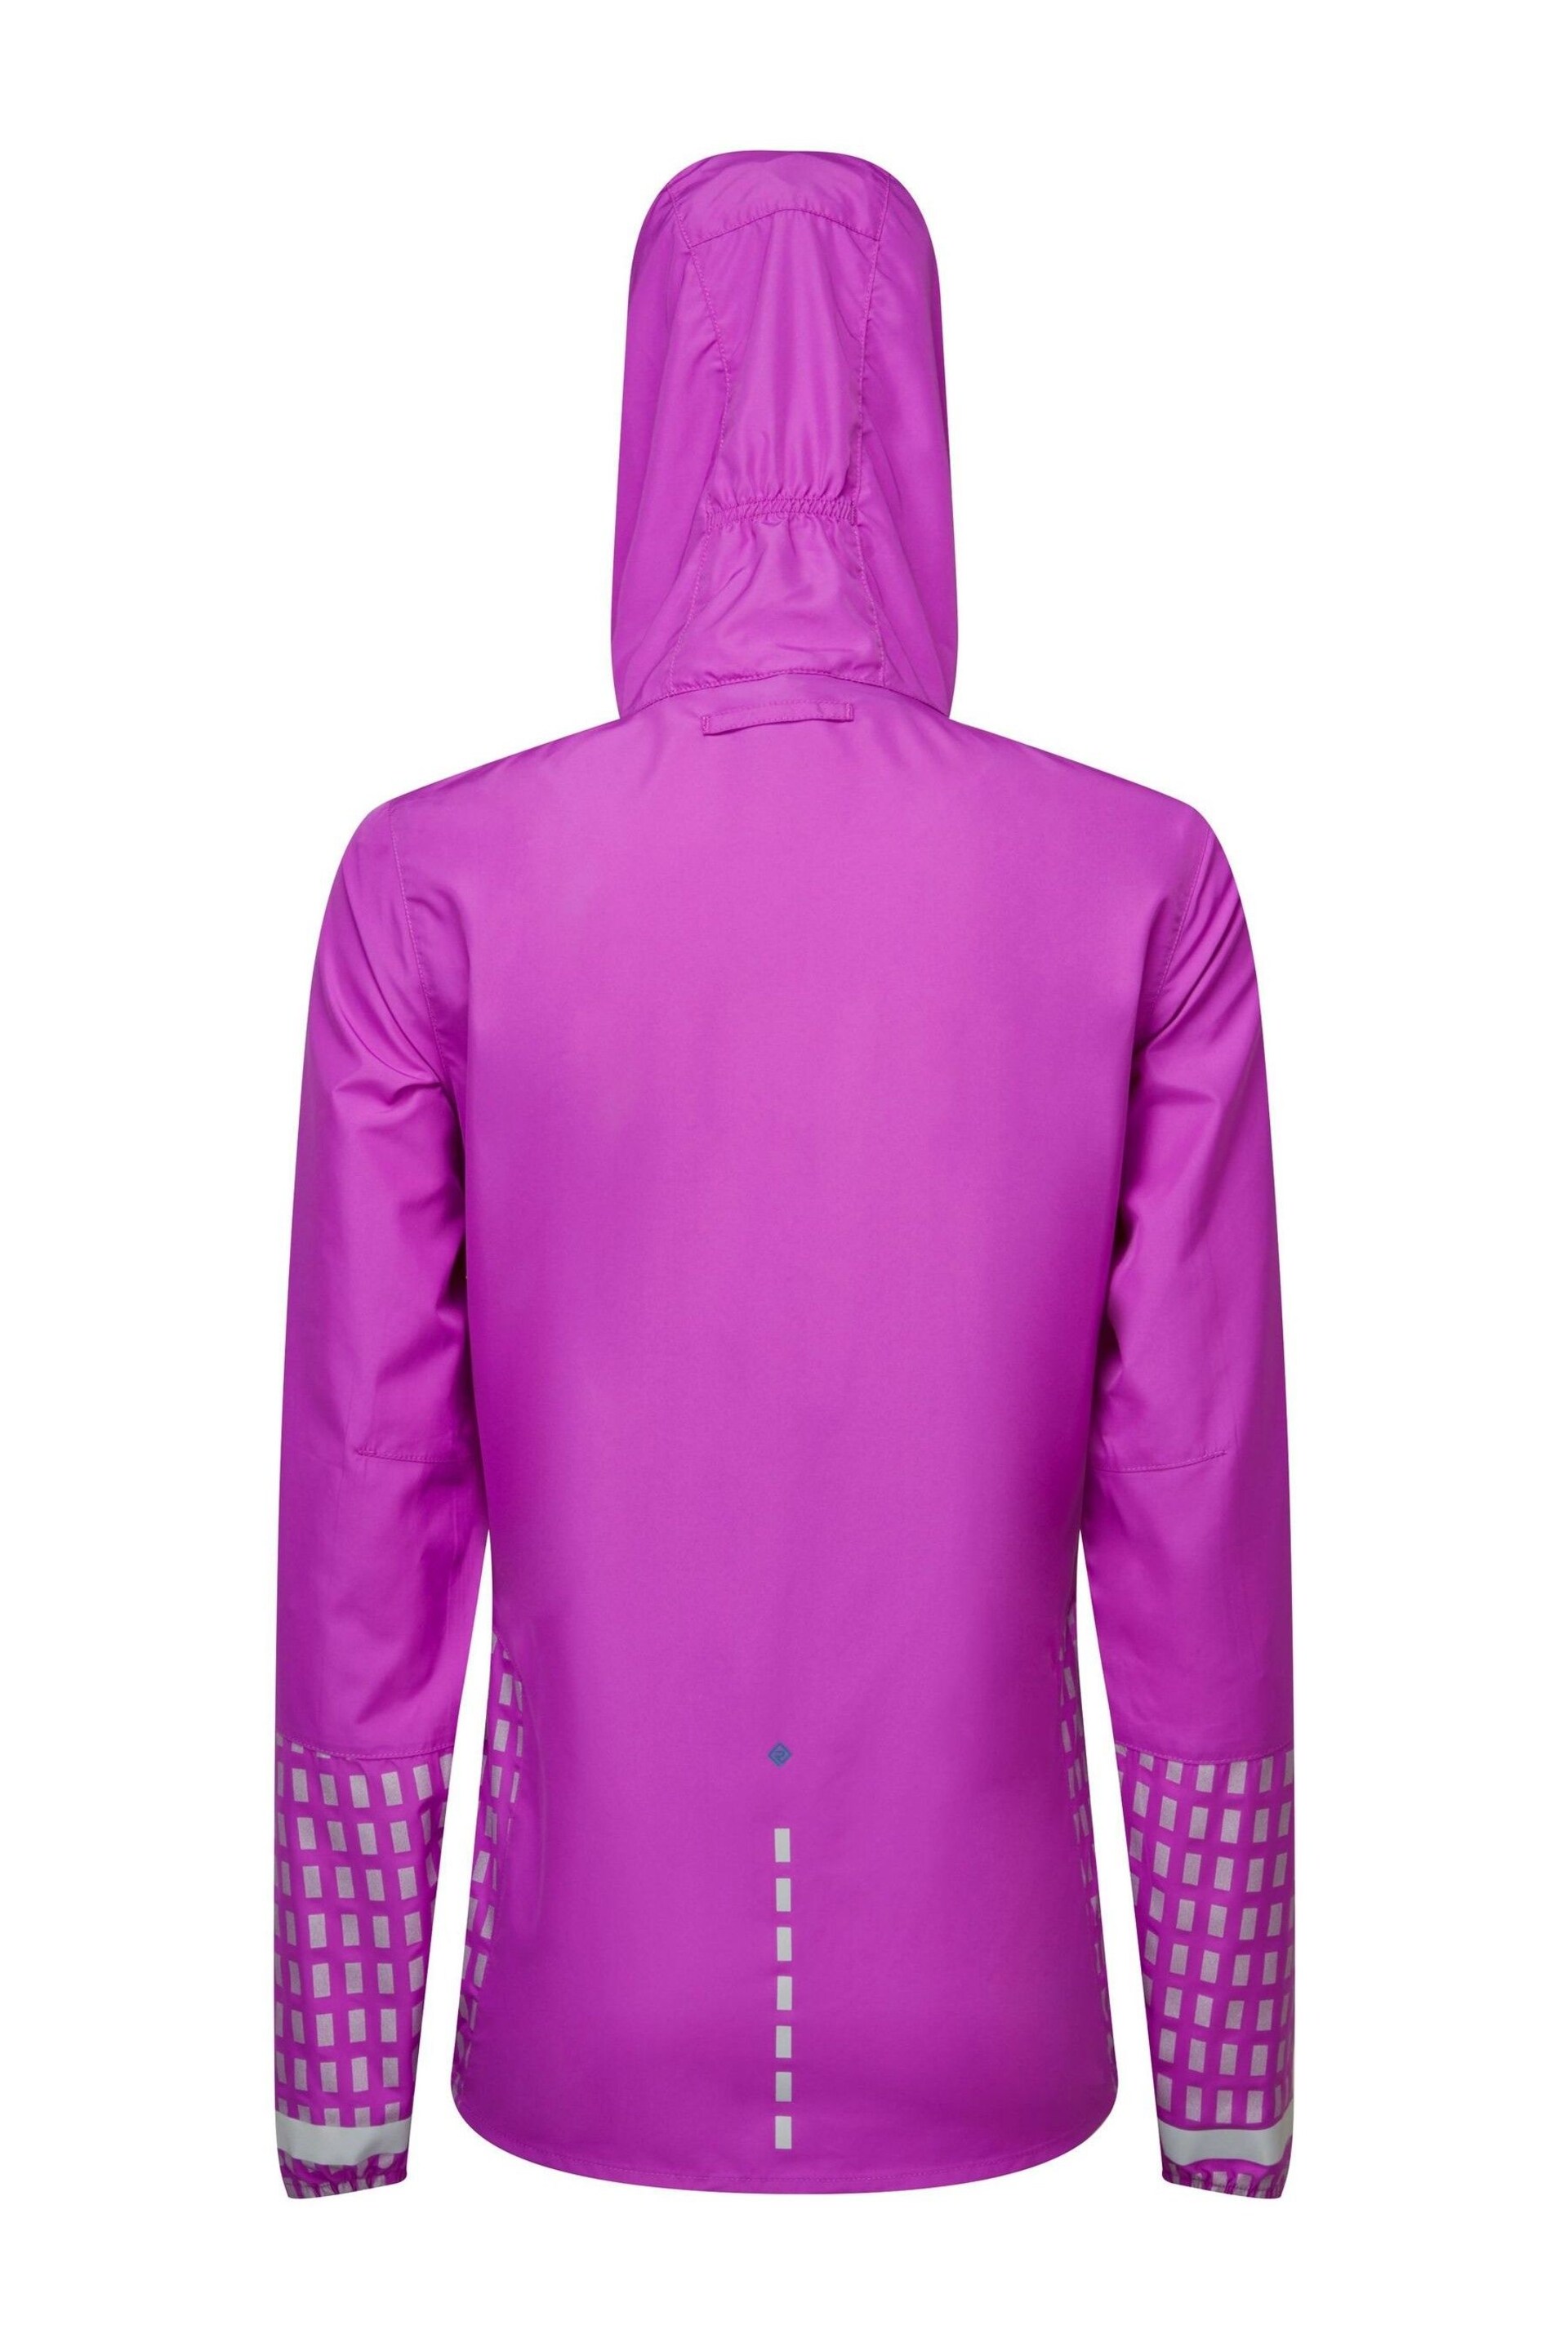 Ronhill Womens Purple Tech Reflective Afterhours Running Jacket - Image 8 of 12